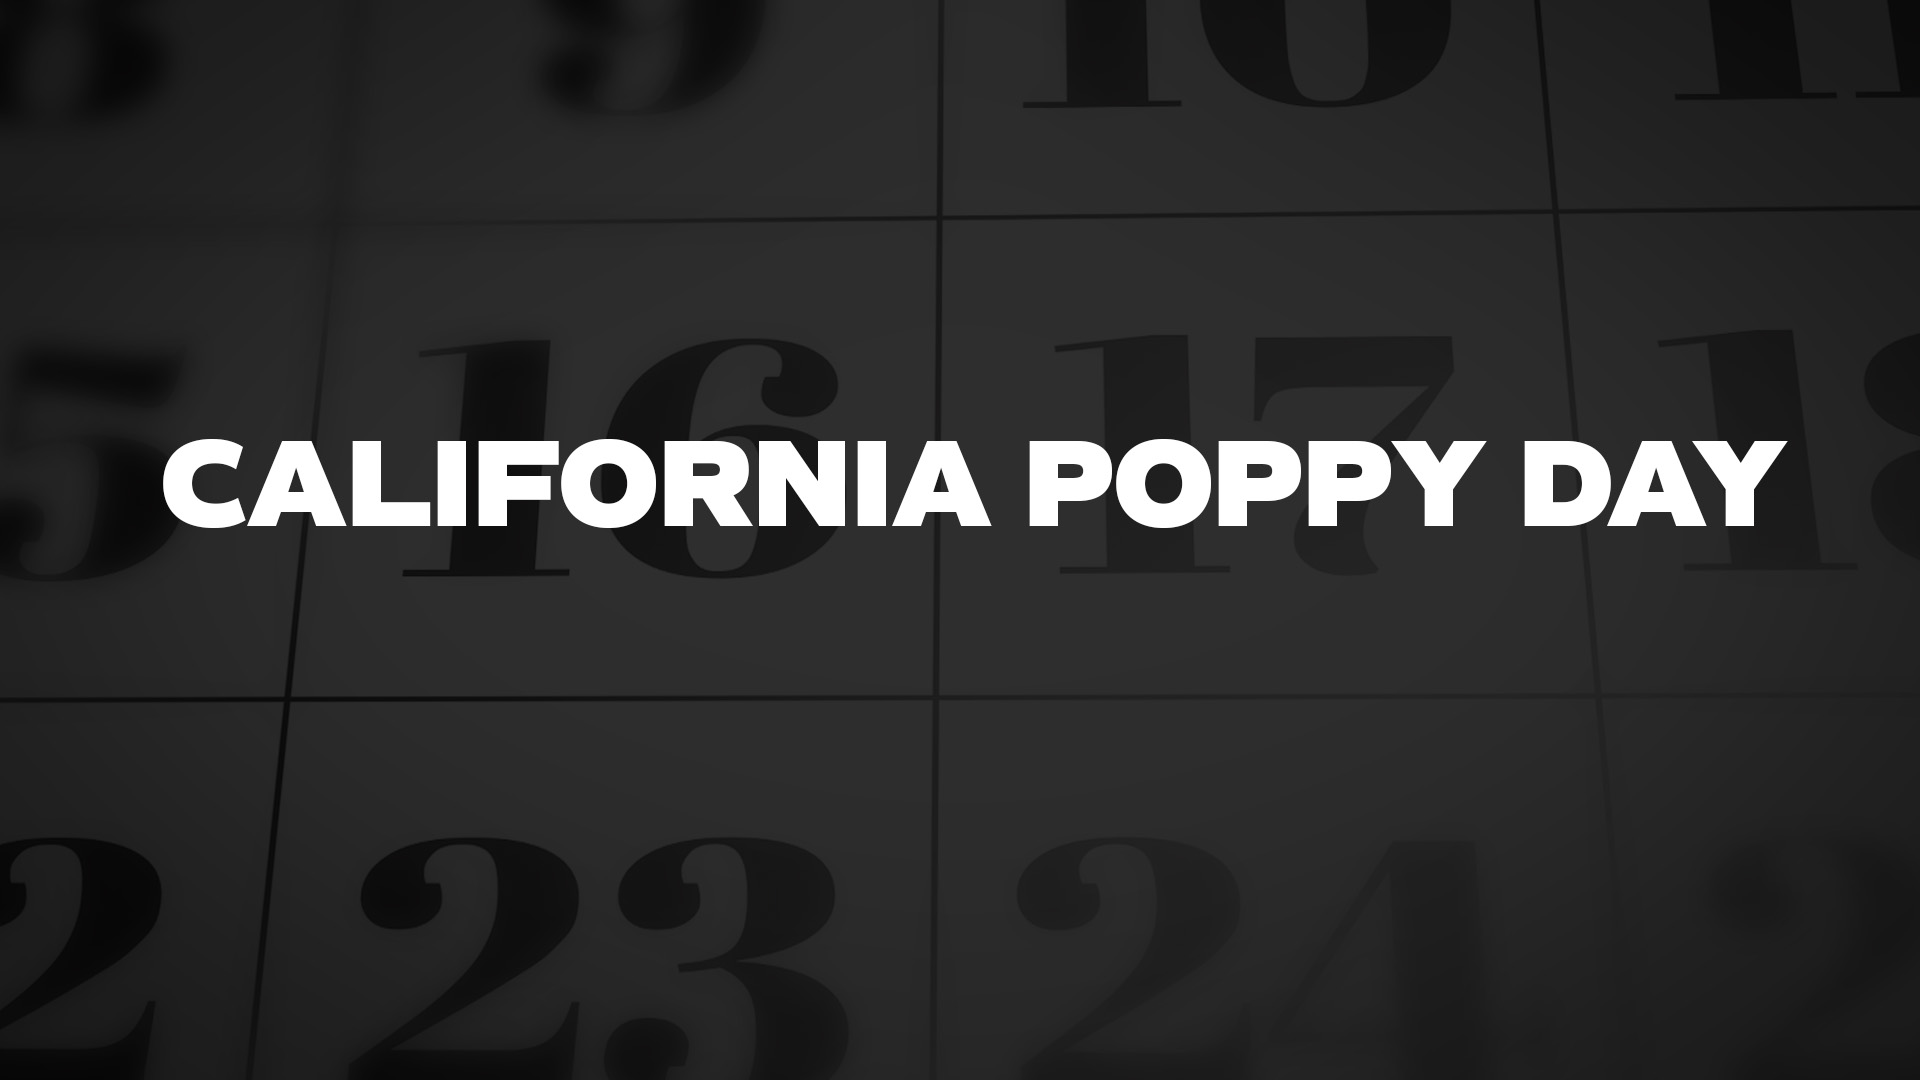 CaliforniaPoppyDay List Of National Days